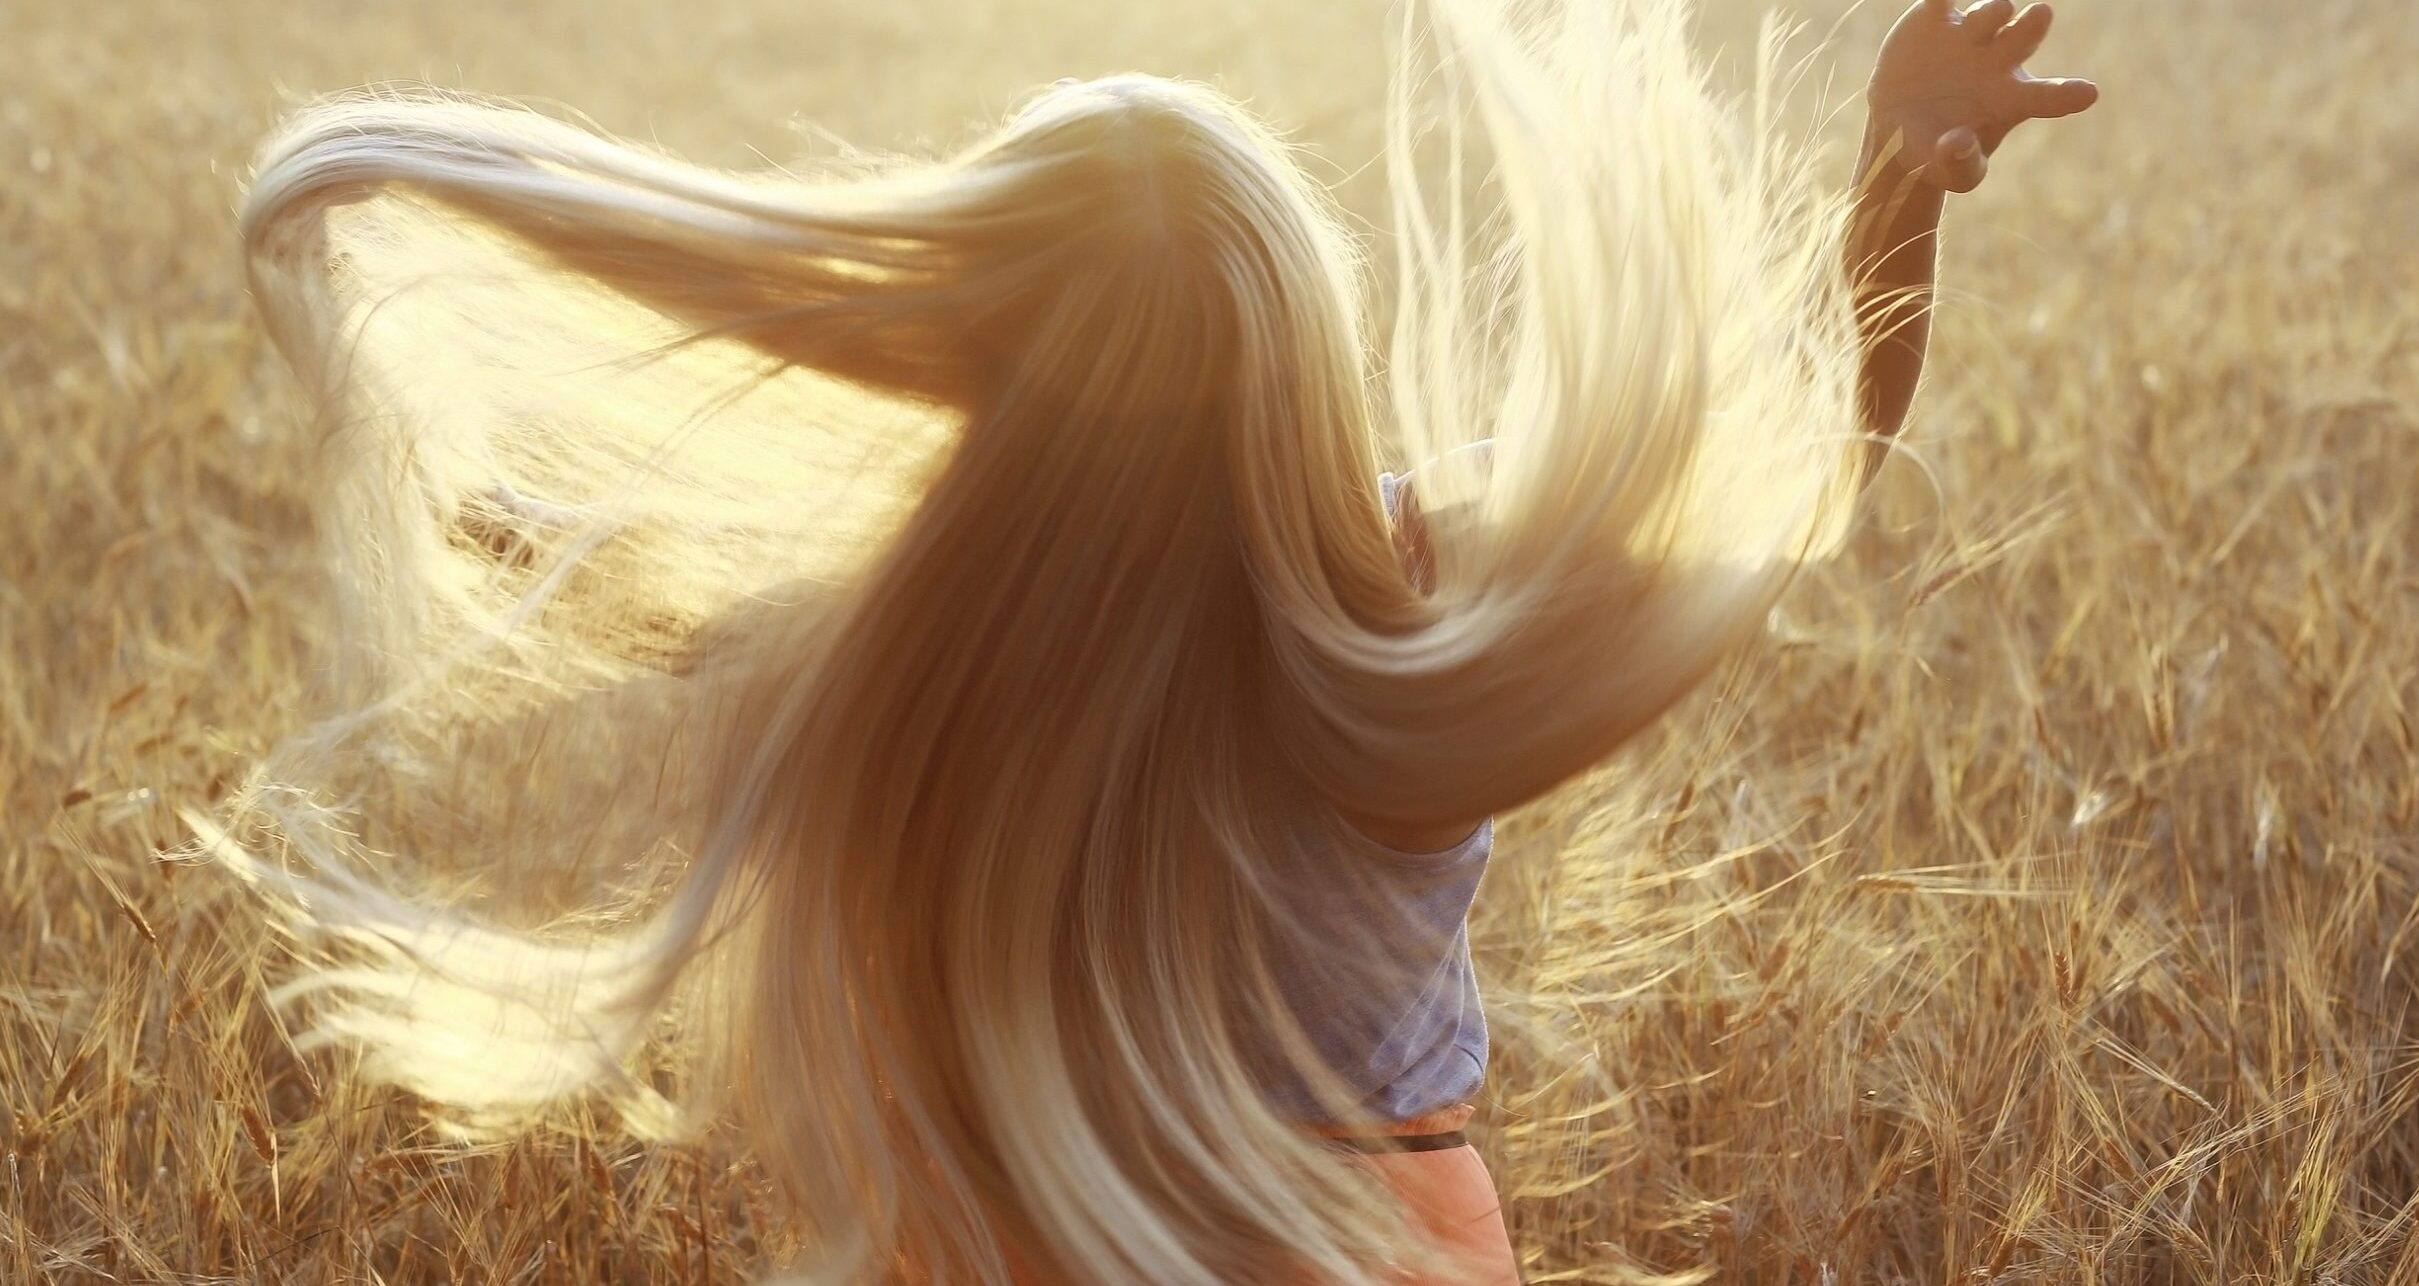 Fettige Haare: Frau mit blonden langen Haaren schwingt ihre Haare im Getreidefeld